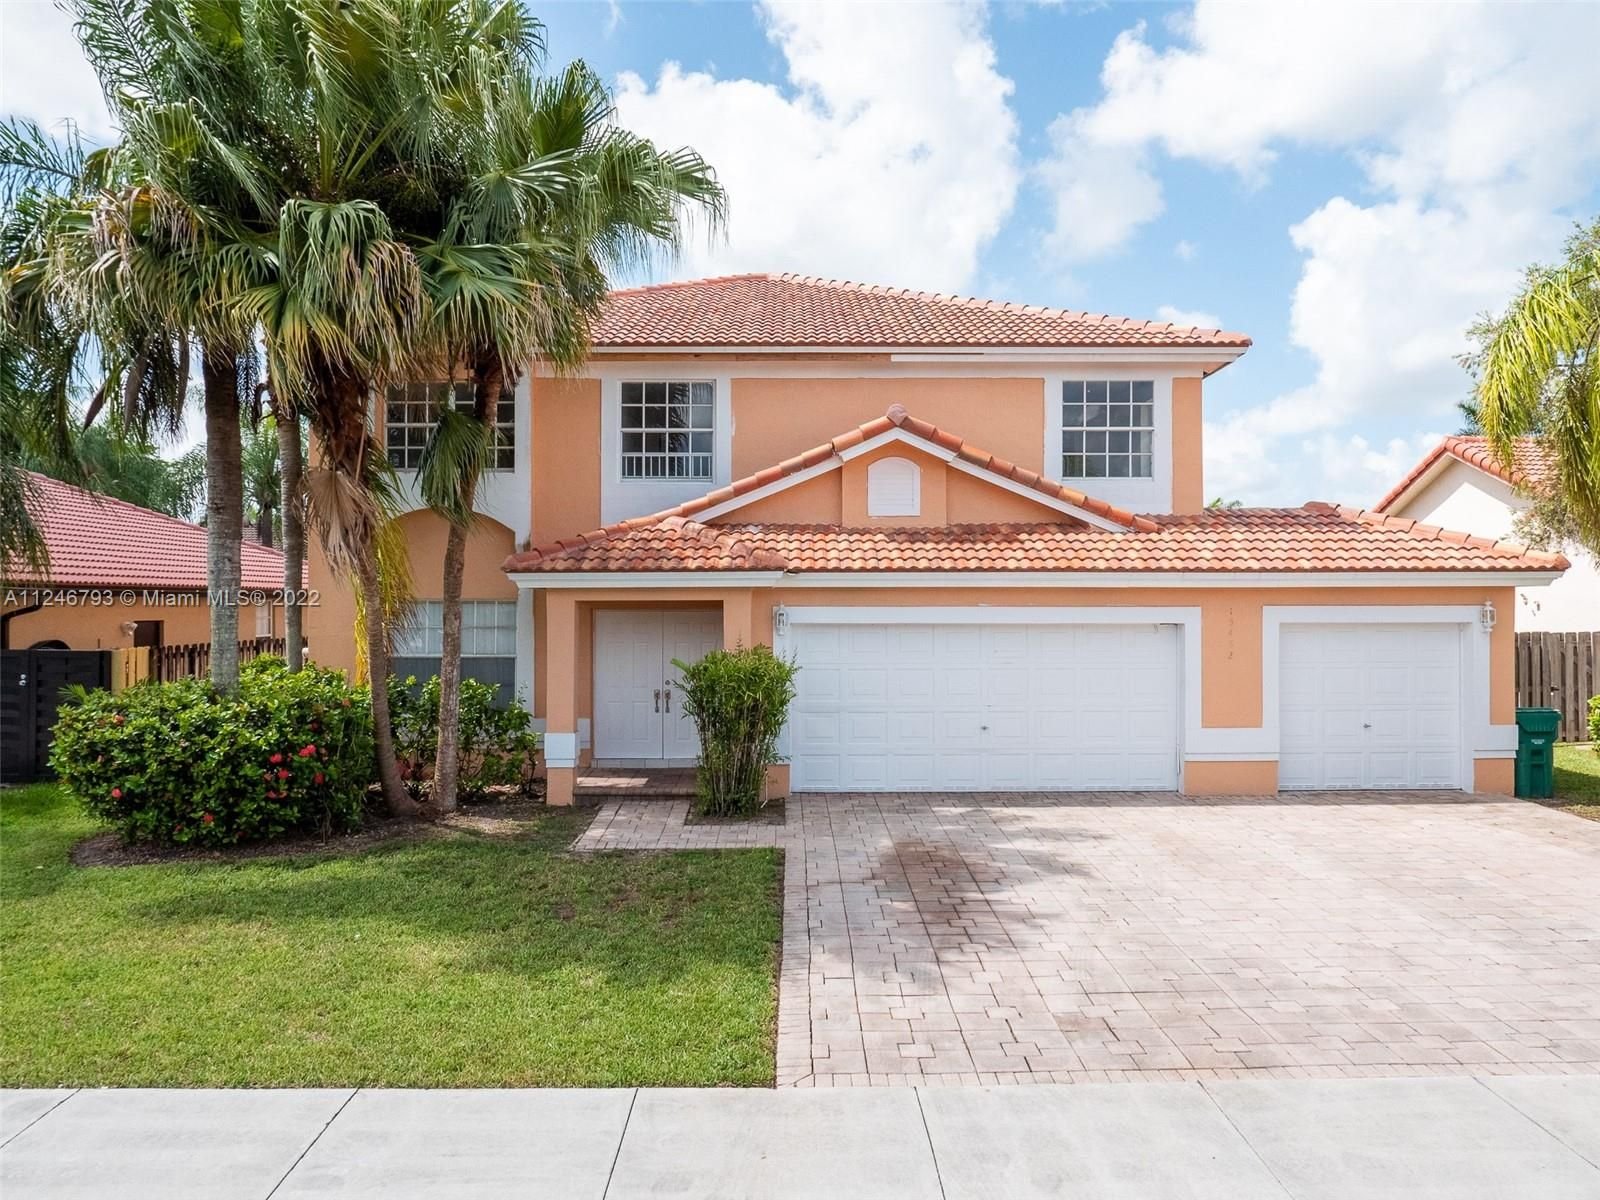 Real estate property located at 15452 146th Ter, Miami-Dade County, Miami, FL